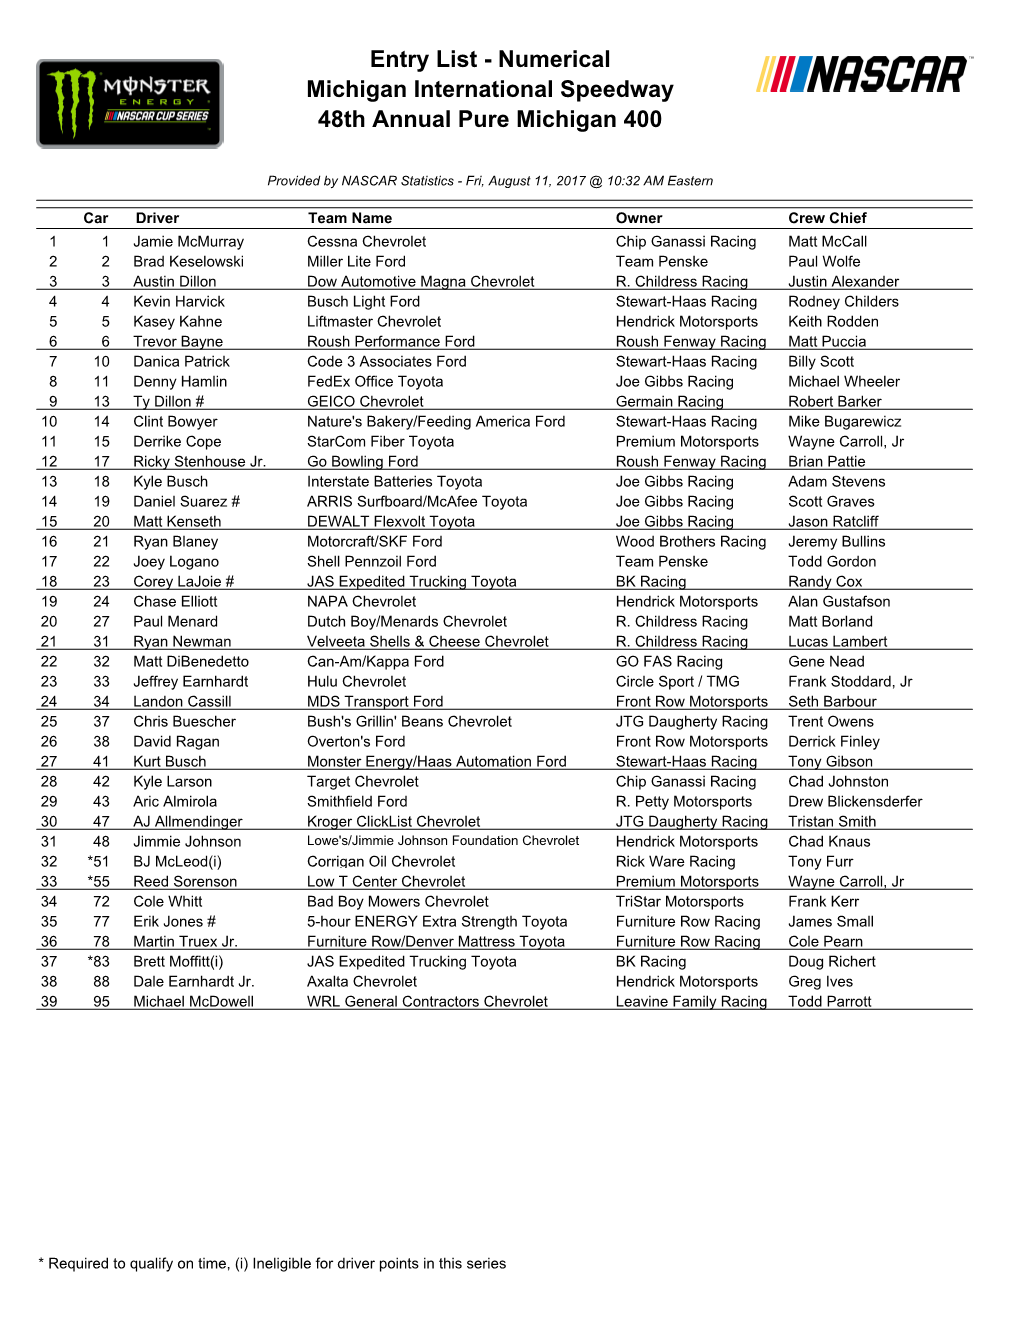 Entry List - Numerical Michigan International Speedway 48Th Annual Pure Michigan 400